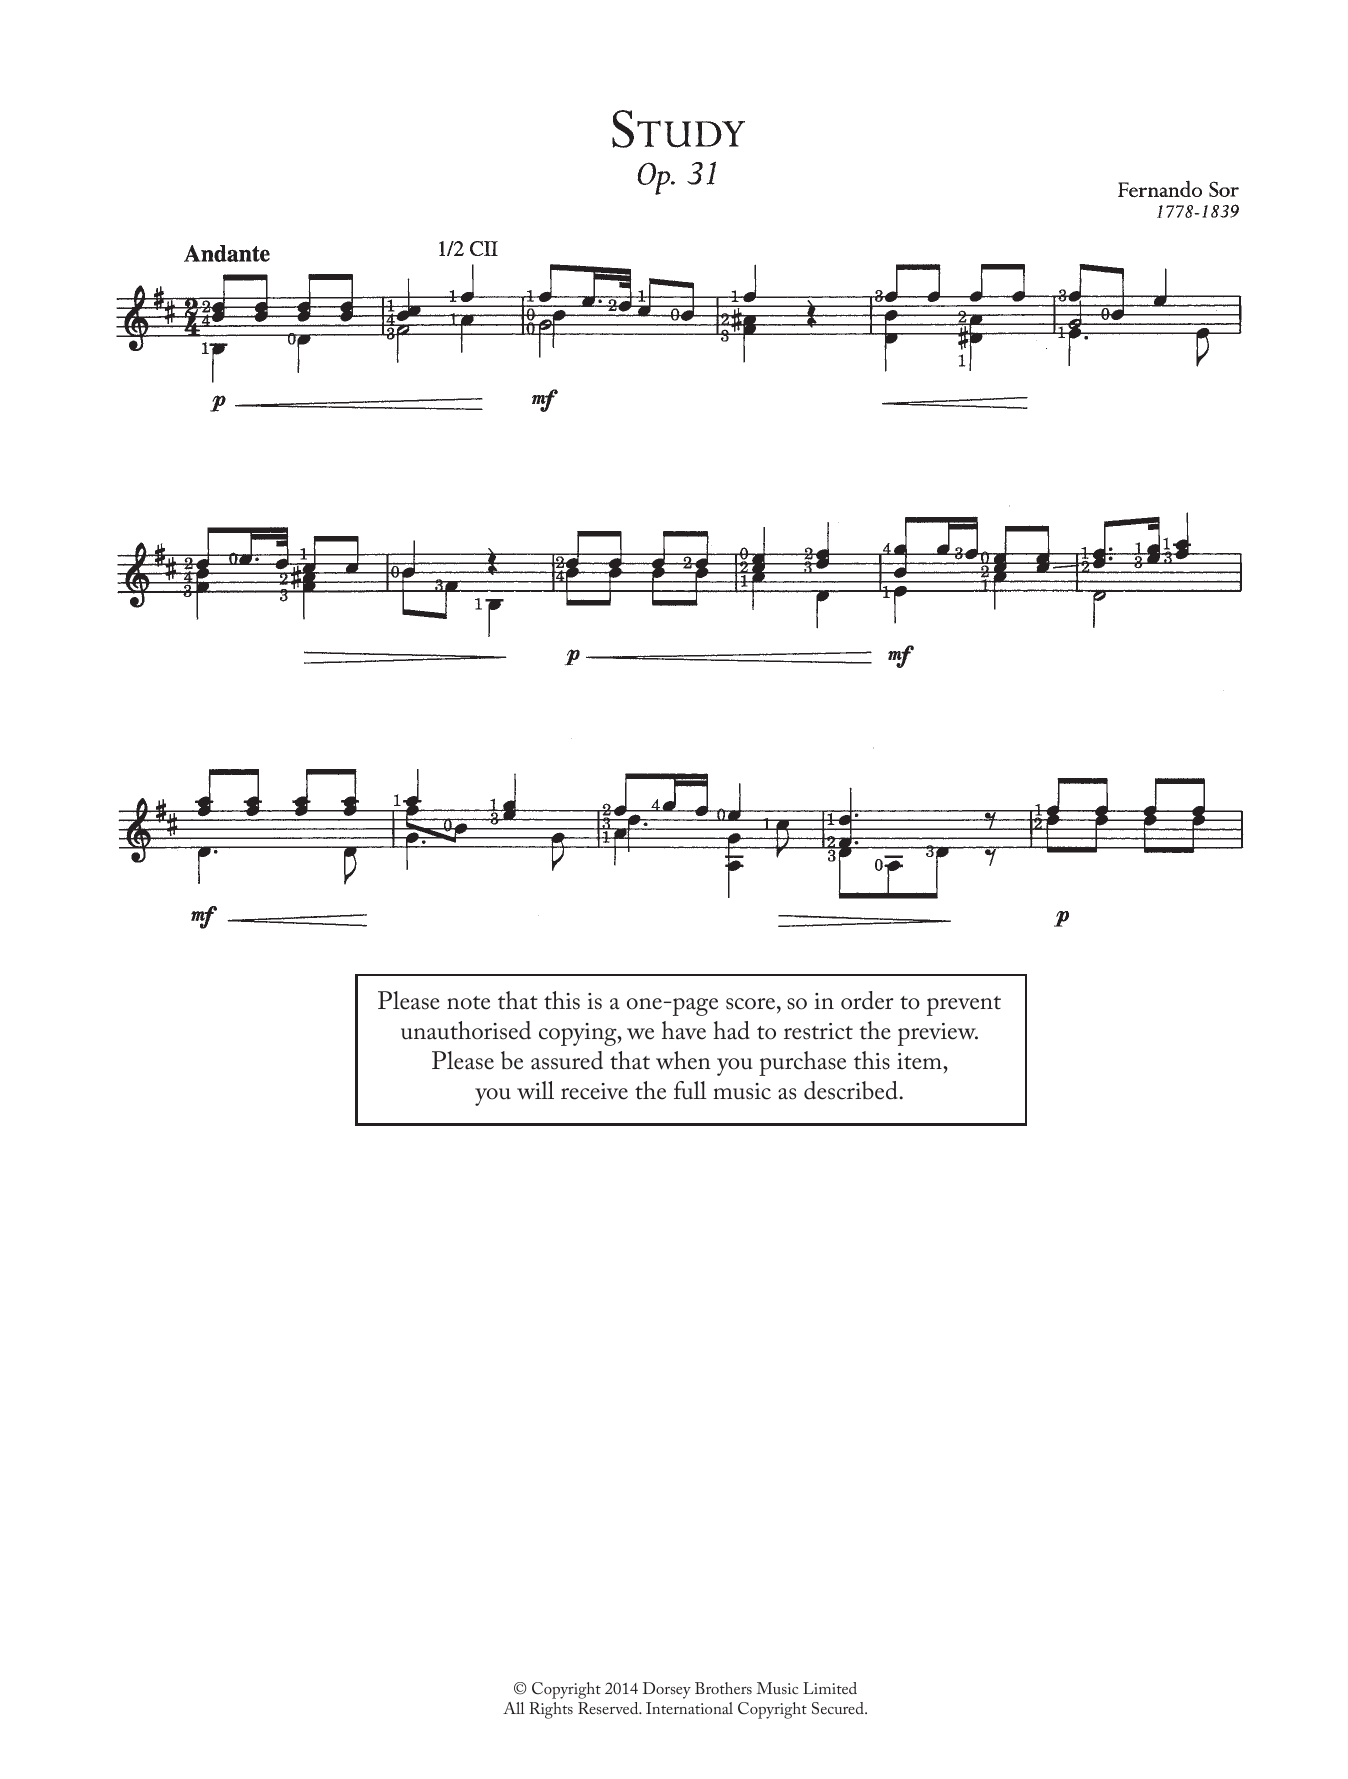 Fernando Sor Study, Op.31 Sheet Music Notes & Chords for Guitar - Download or Print PDF